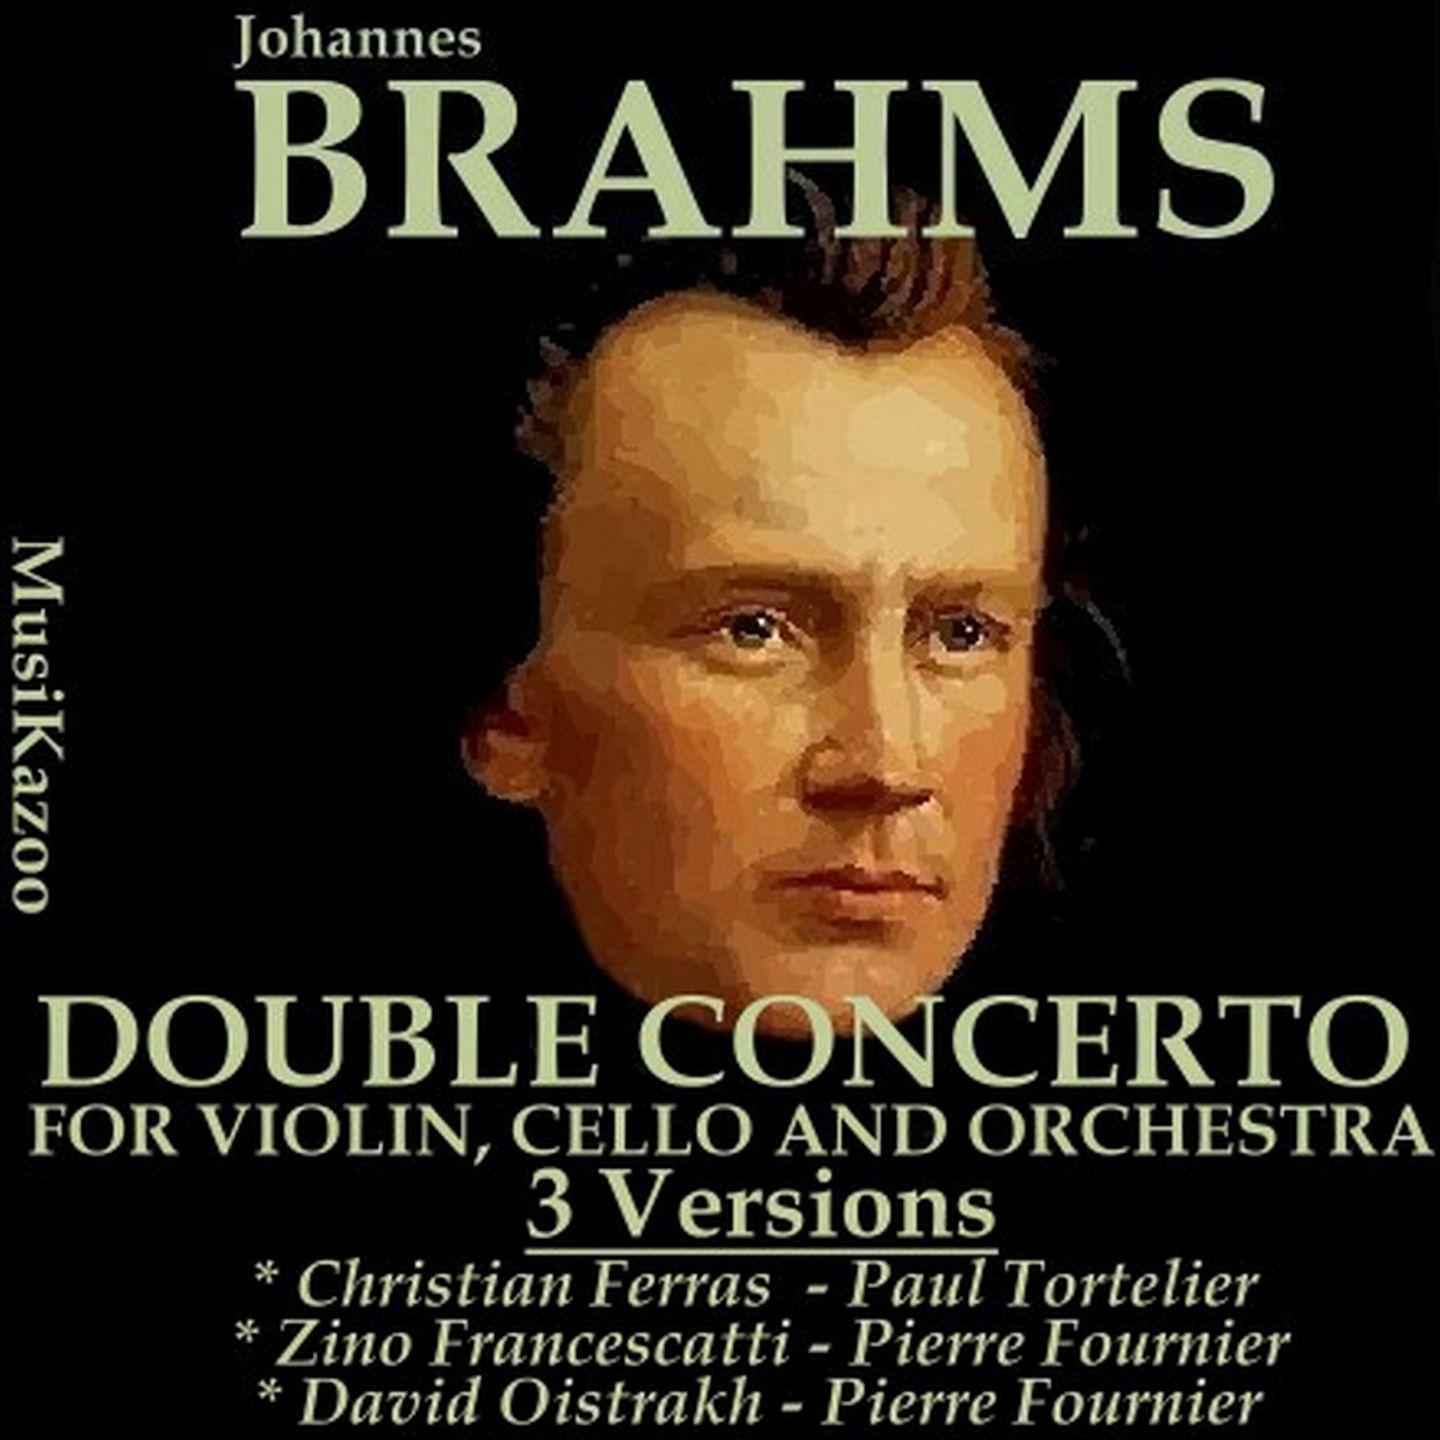 Brahms, Vol. 5 : Double Concerto for Violin, Cello and Orchestra - Three Versions